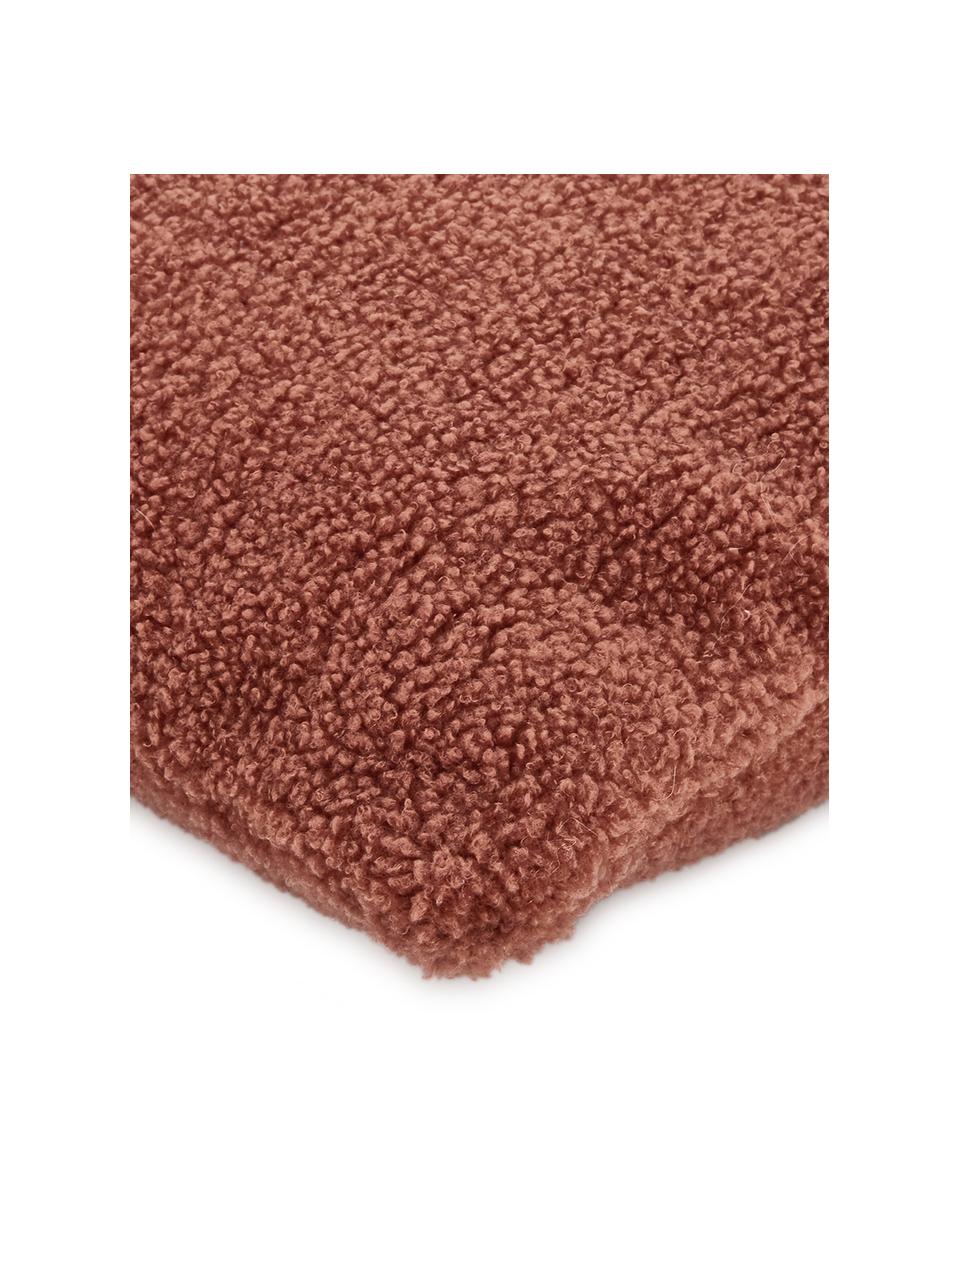 Flauschige Teddy-Kissenhülle Mille, Vorderseite: 100% Polyester (Teddyfell, Rückseite: 100% Polyester (Teddyfell, Rot, B 45 x L 45 cm